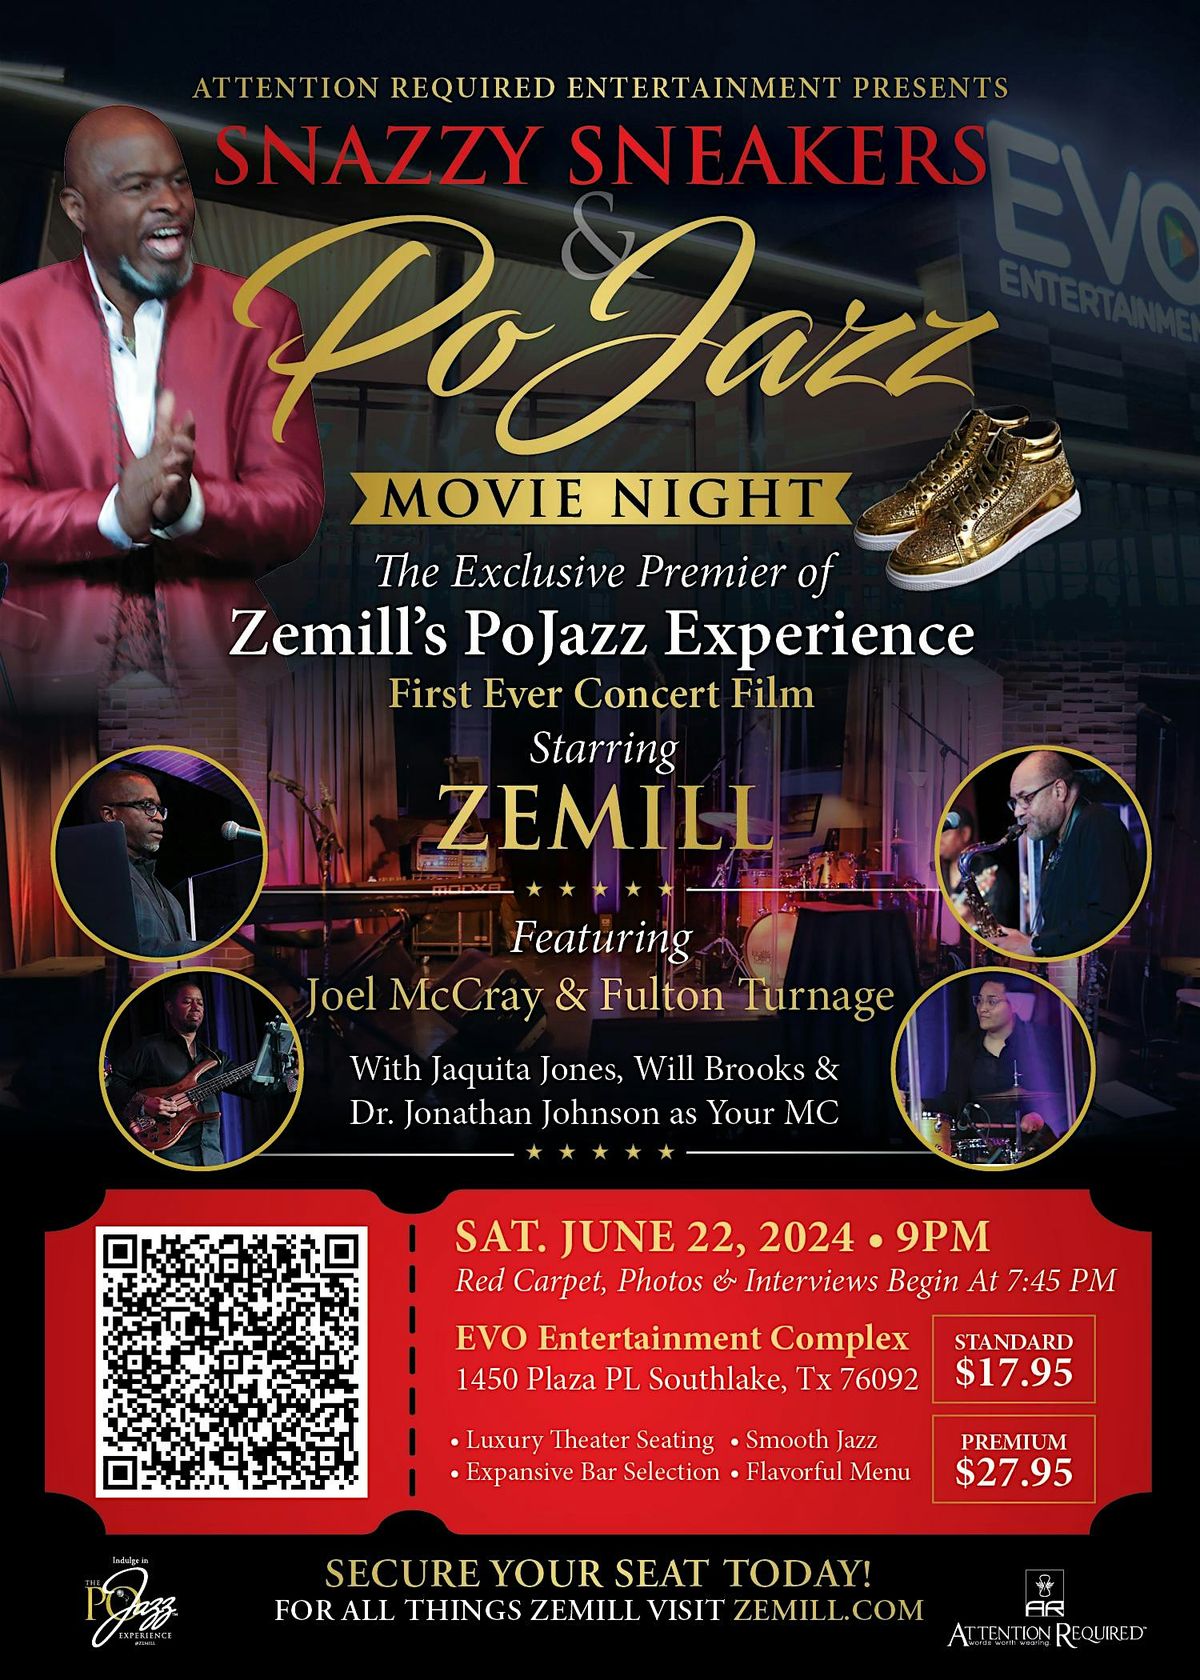 Snazzy Sneakers & PoJazz Movie Night - Zemill's First Concert Film Premier